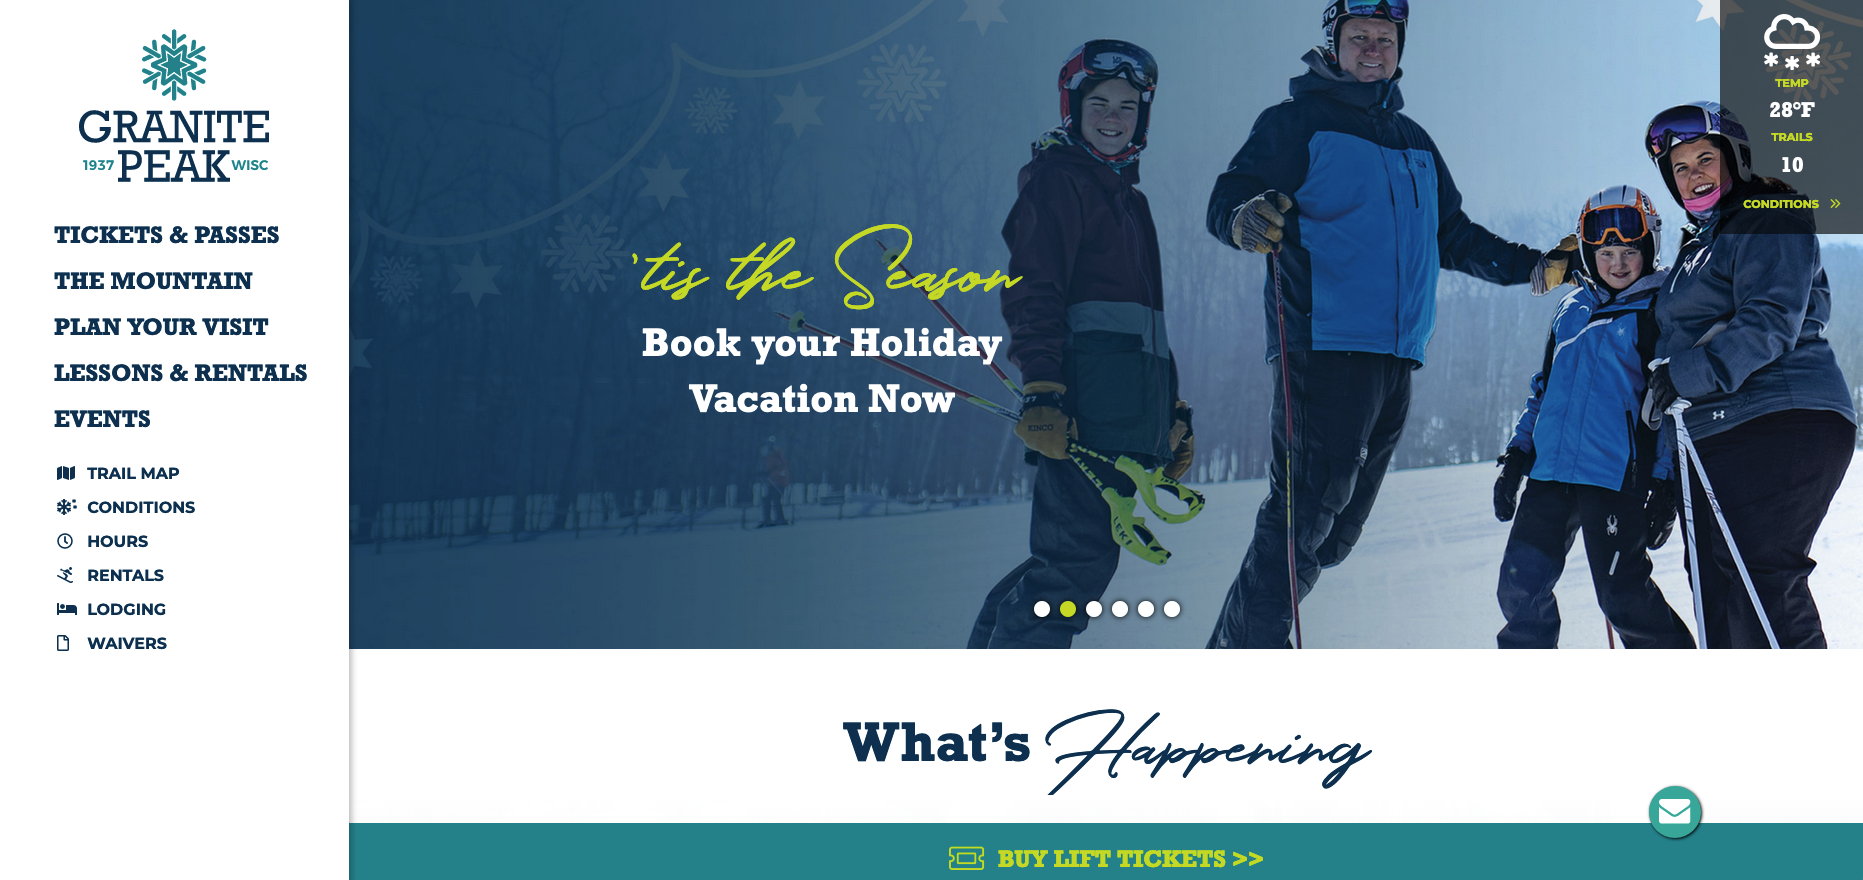 Granite Peak Ski Area Website Home Page Design